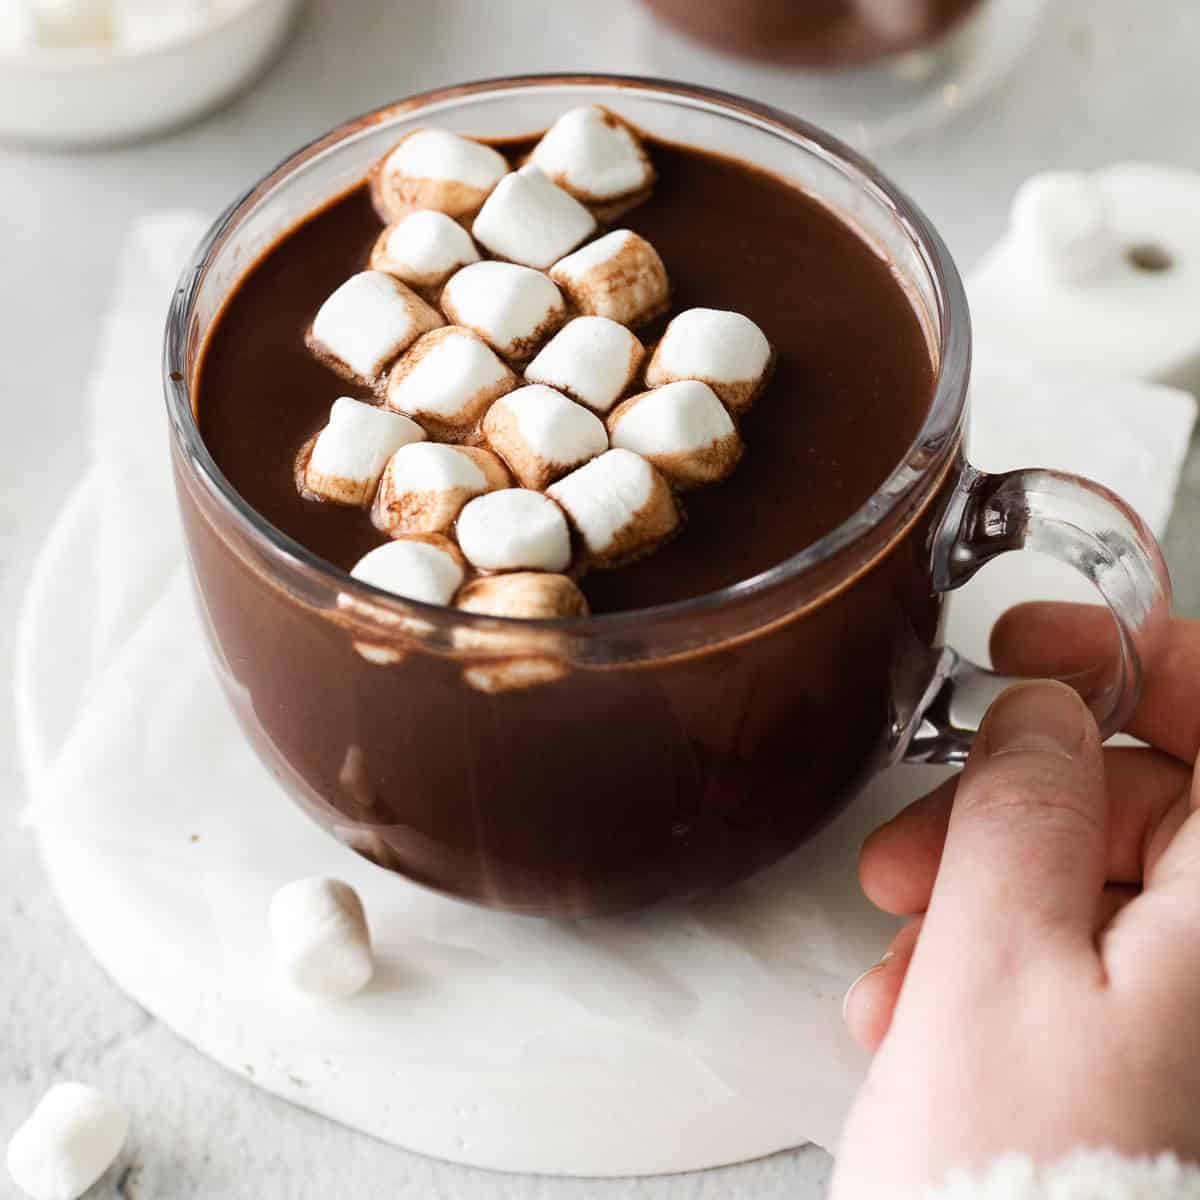 https://meaningfuleats.com/wp-content/uploads/2022/11/gluten-free-hot-chocolate.jpg